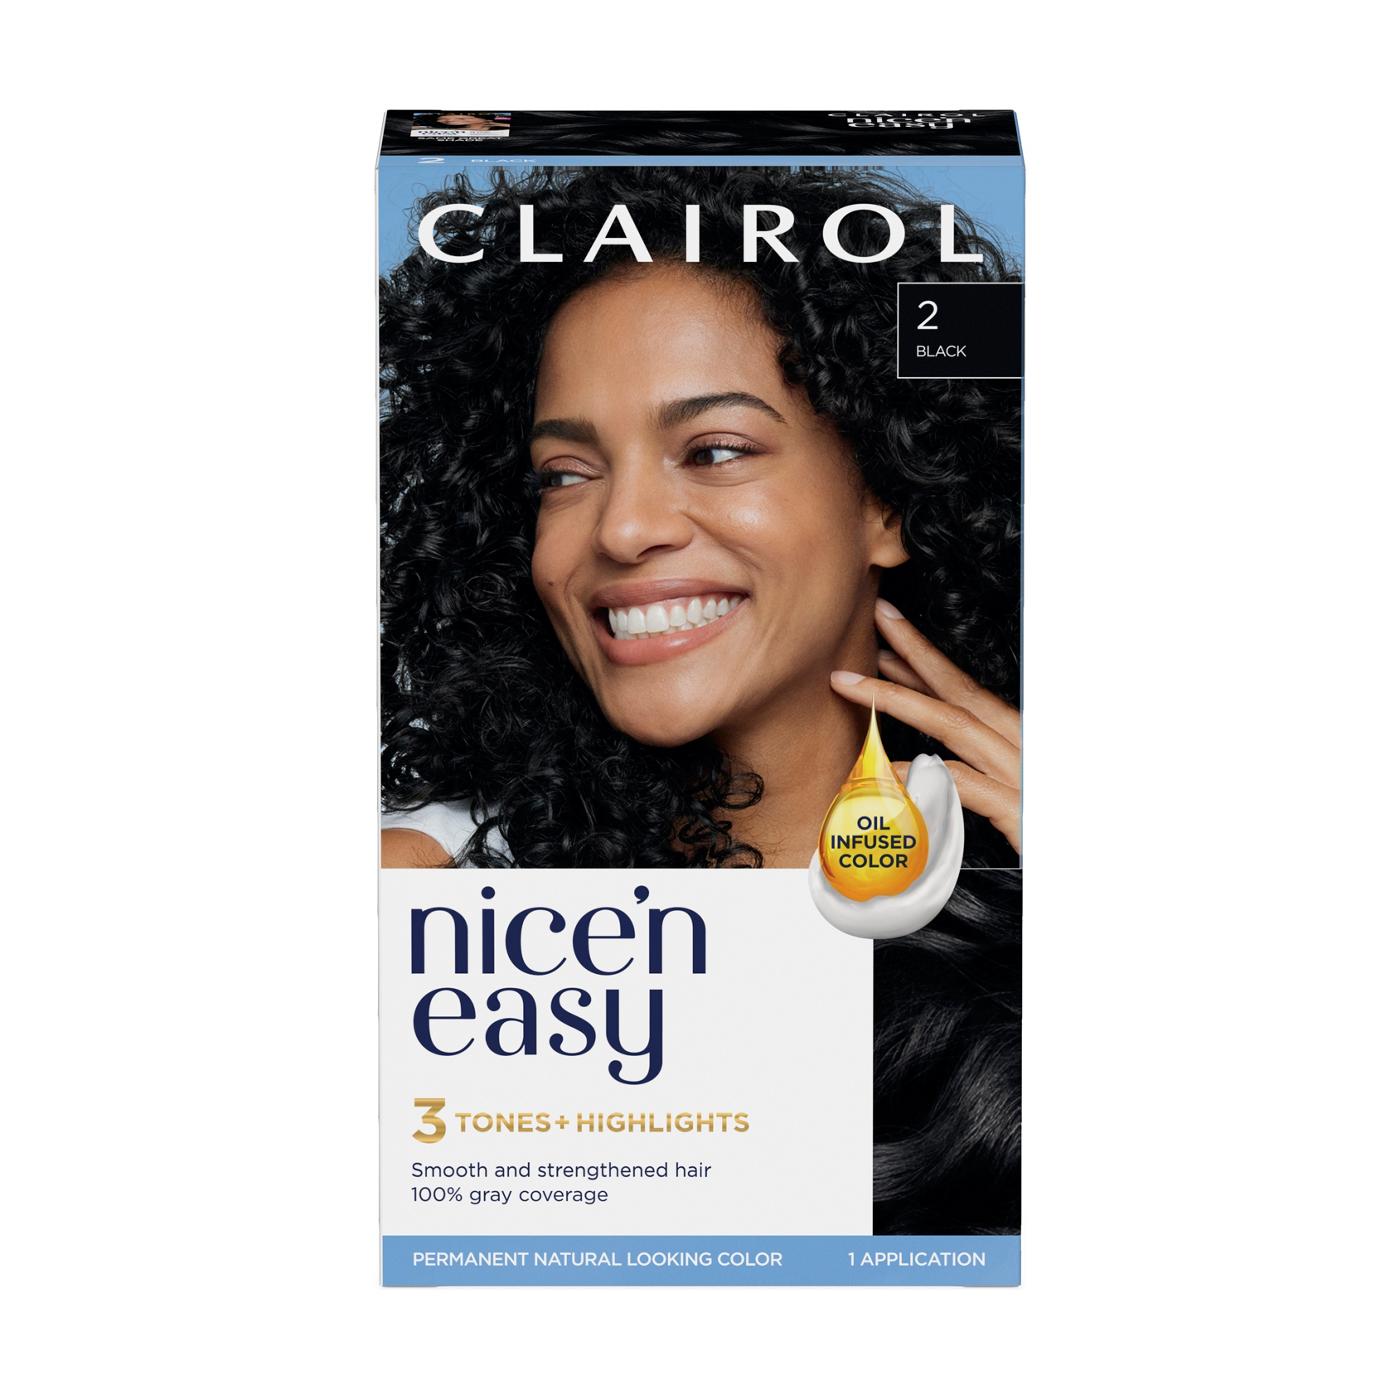 Clairol Nice 'N Easy Permanent Hair Color - 2 Black; image 1 of 8